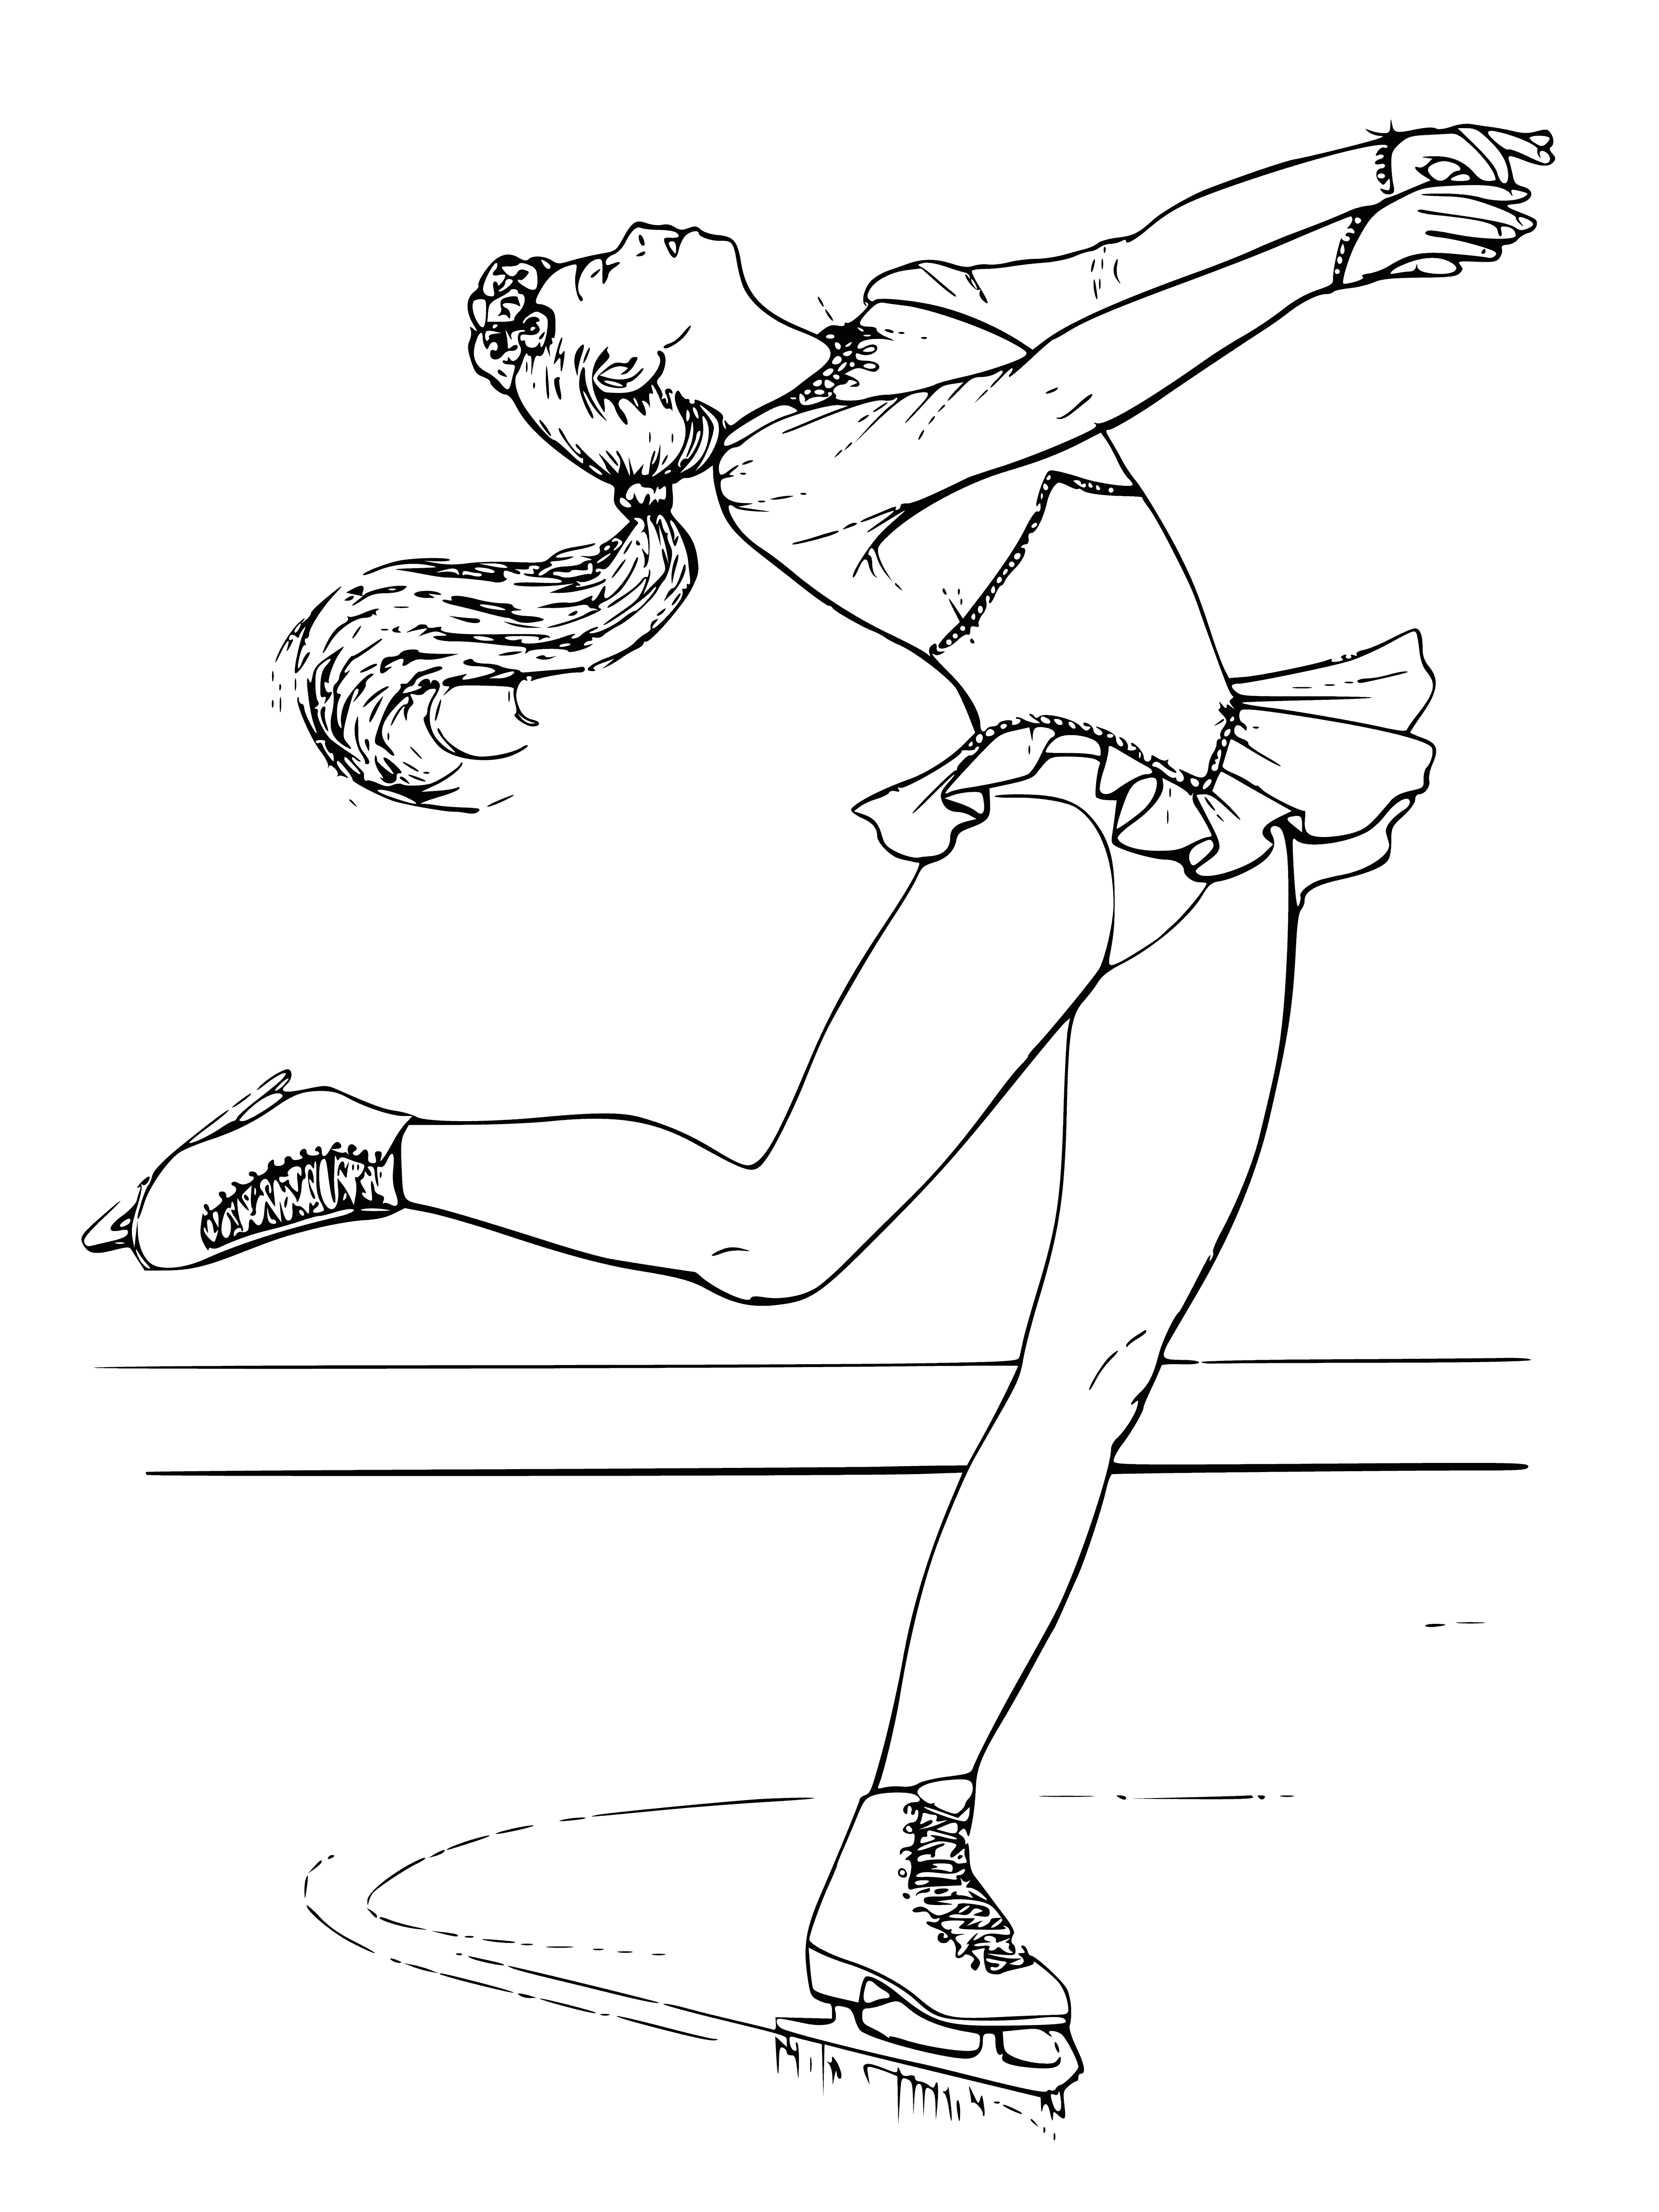 Single figure skating coloring page